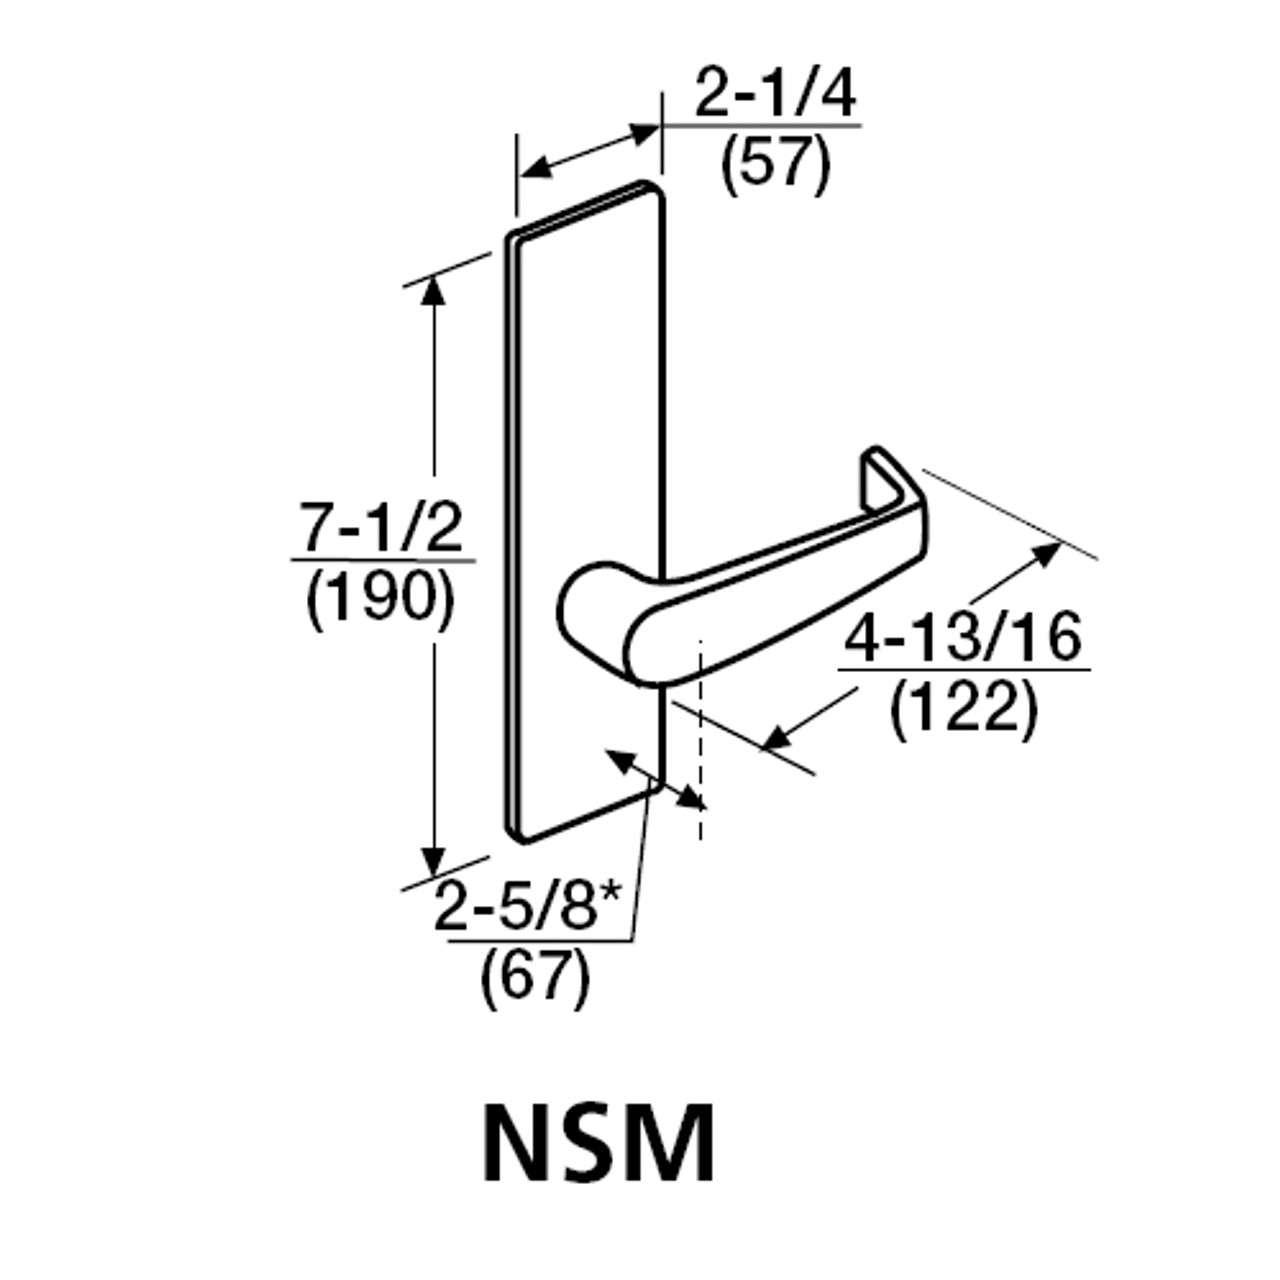 ML2067-NSM-626 Corbin Russwin ML2000 Series Mortise Apartment Locksets with Newport Lever and Deadbolt in Satin Chrome